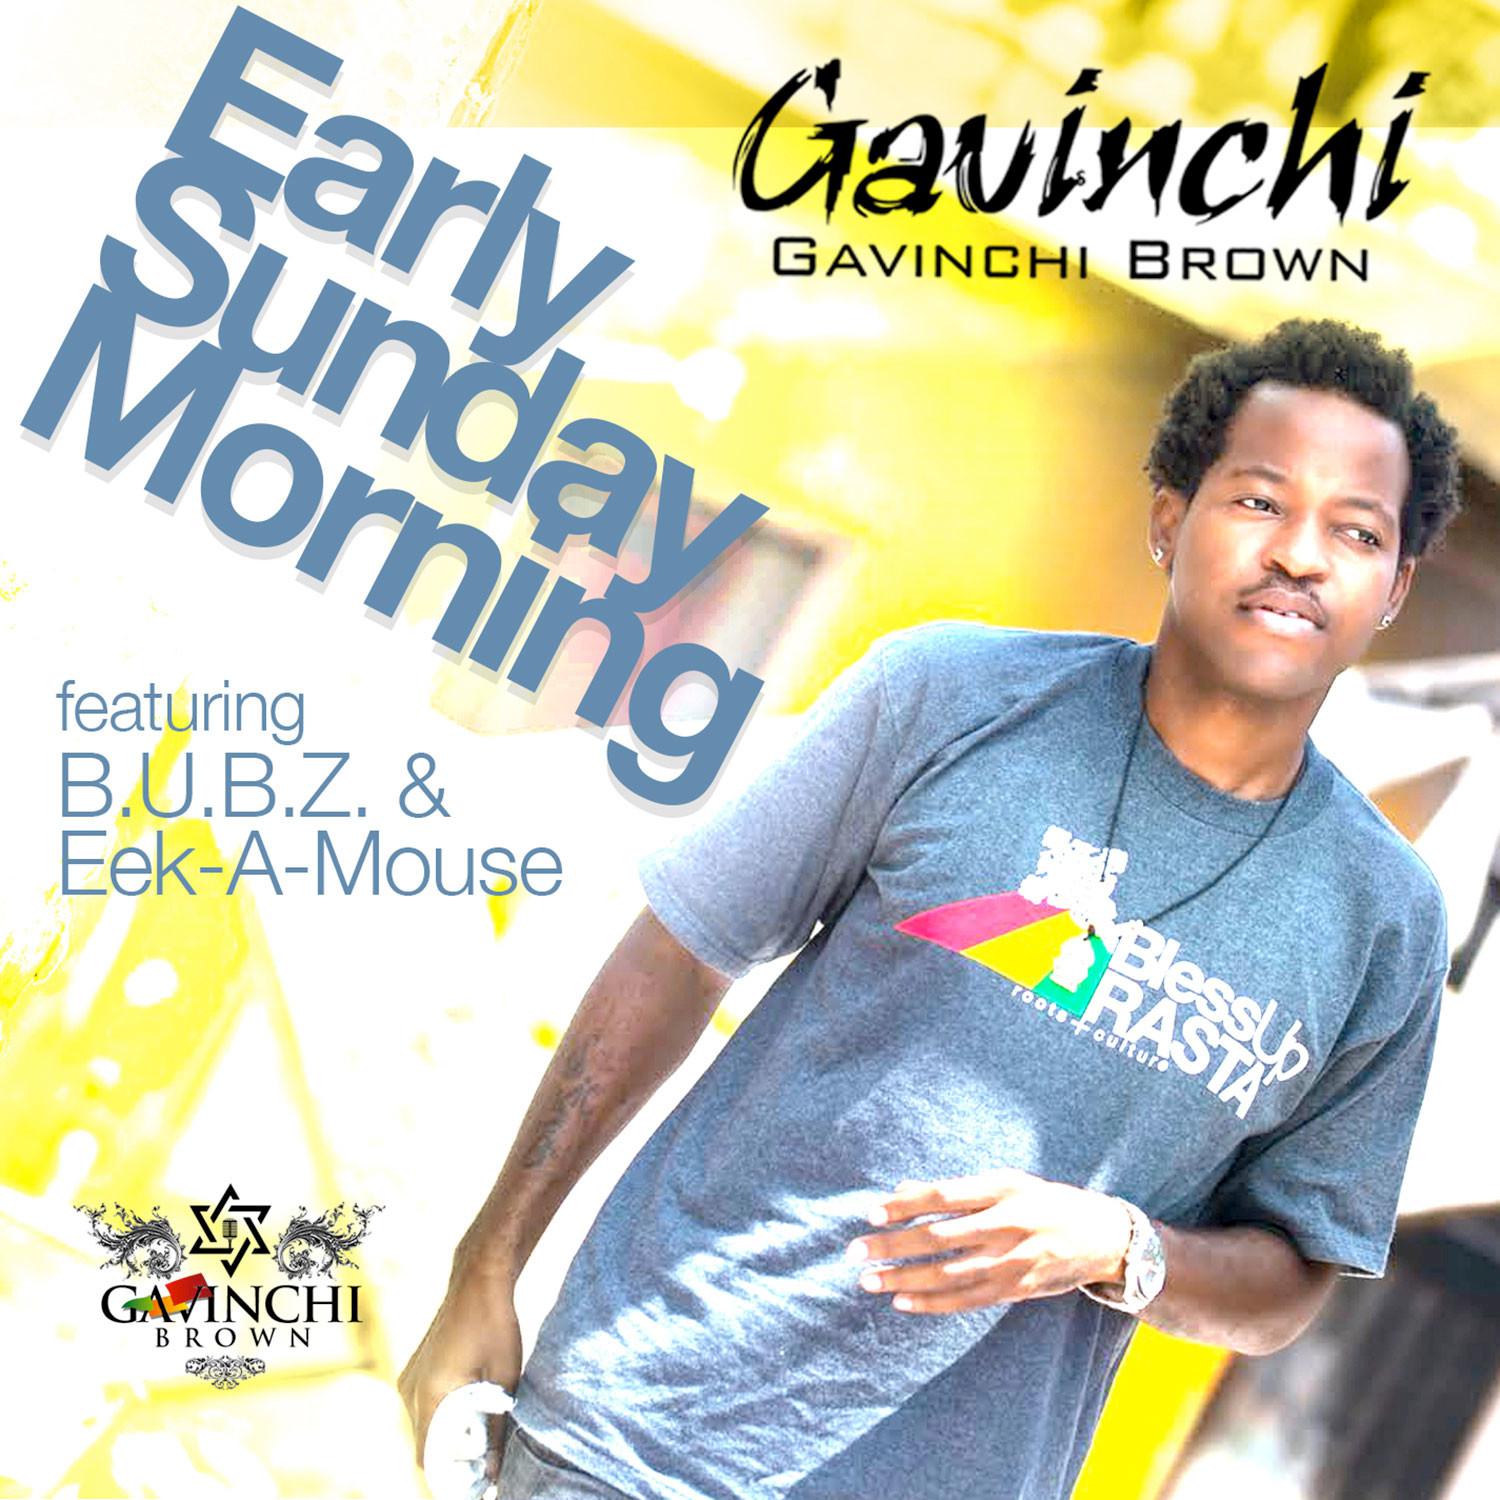 Early Sunday Morning (feat B.U.B.Z., Eek-A-Mouse)